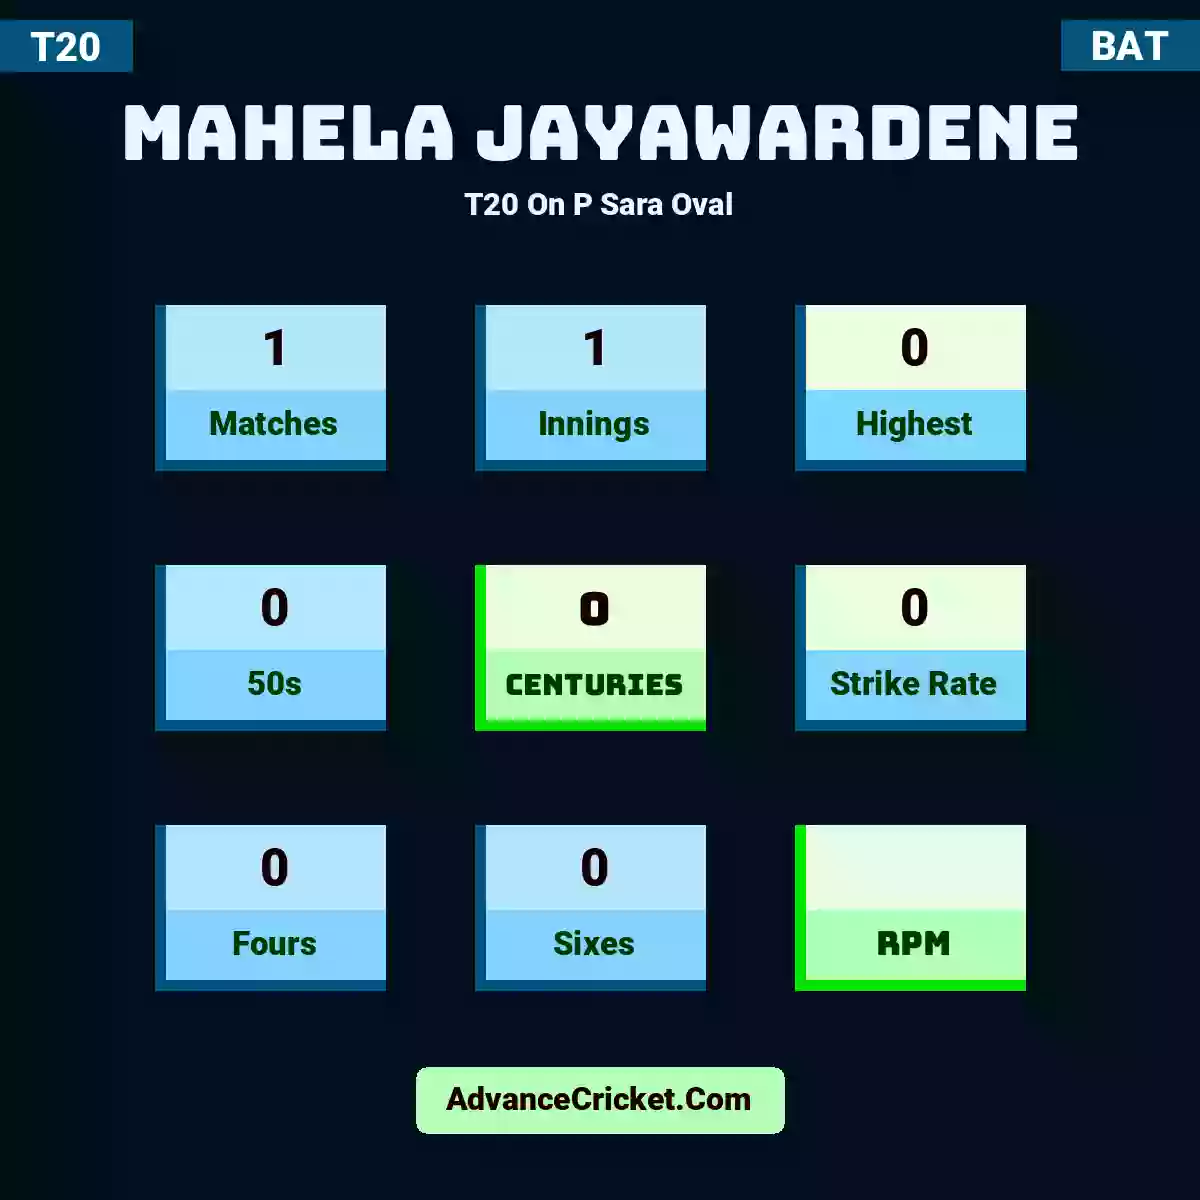 Mahela Jayawardene T20  On P Sara Oval, Mahela Jayawardene played 1 matches, scored 0 runs as highest, 0 half-centuries, and 0 centuries, with a strike rate of 0. M.Jayawardene hit 0 fours and 0 sixes.